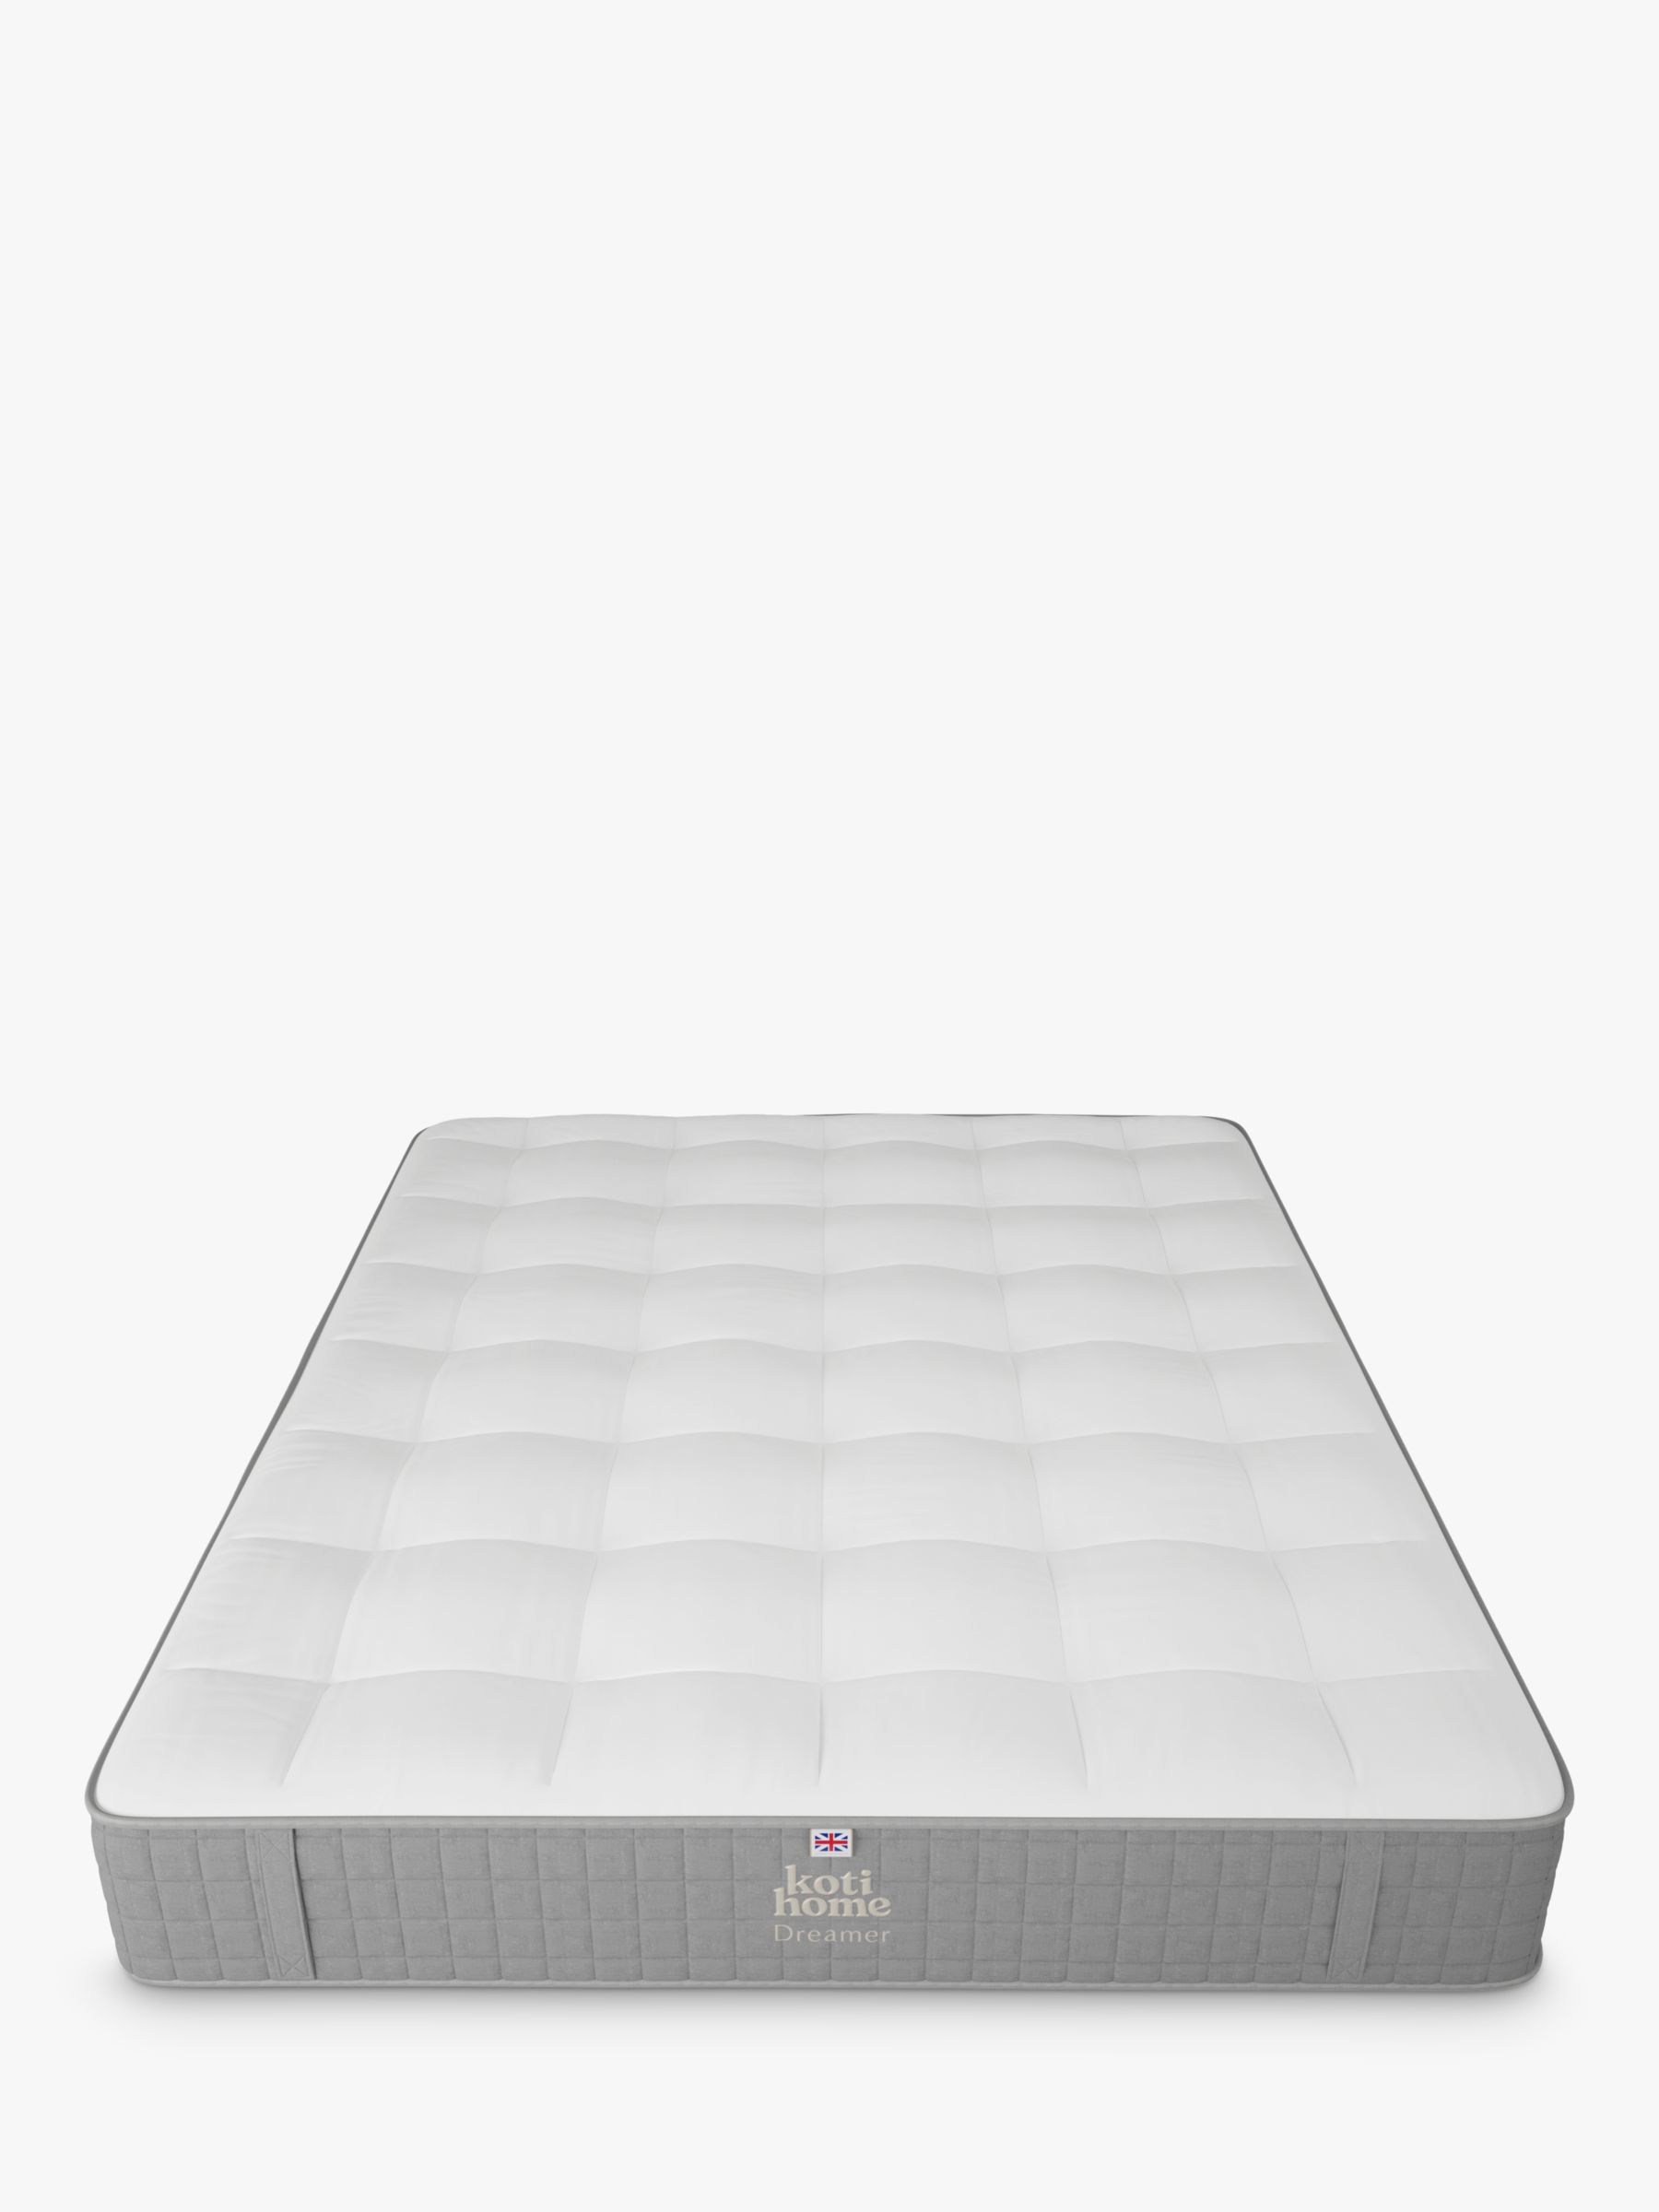 Photo of Koti home dreamer pocket spring mattress medium/firm support double